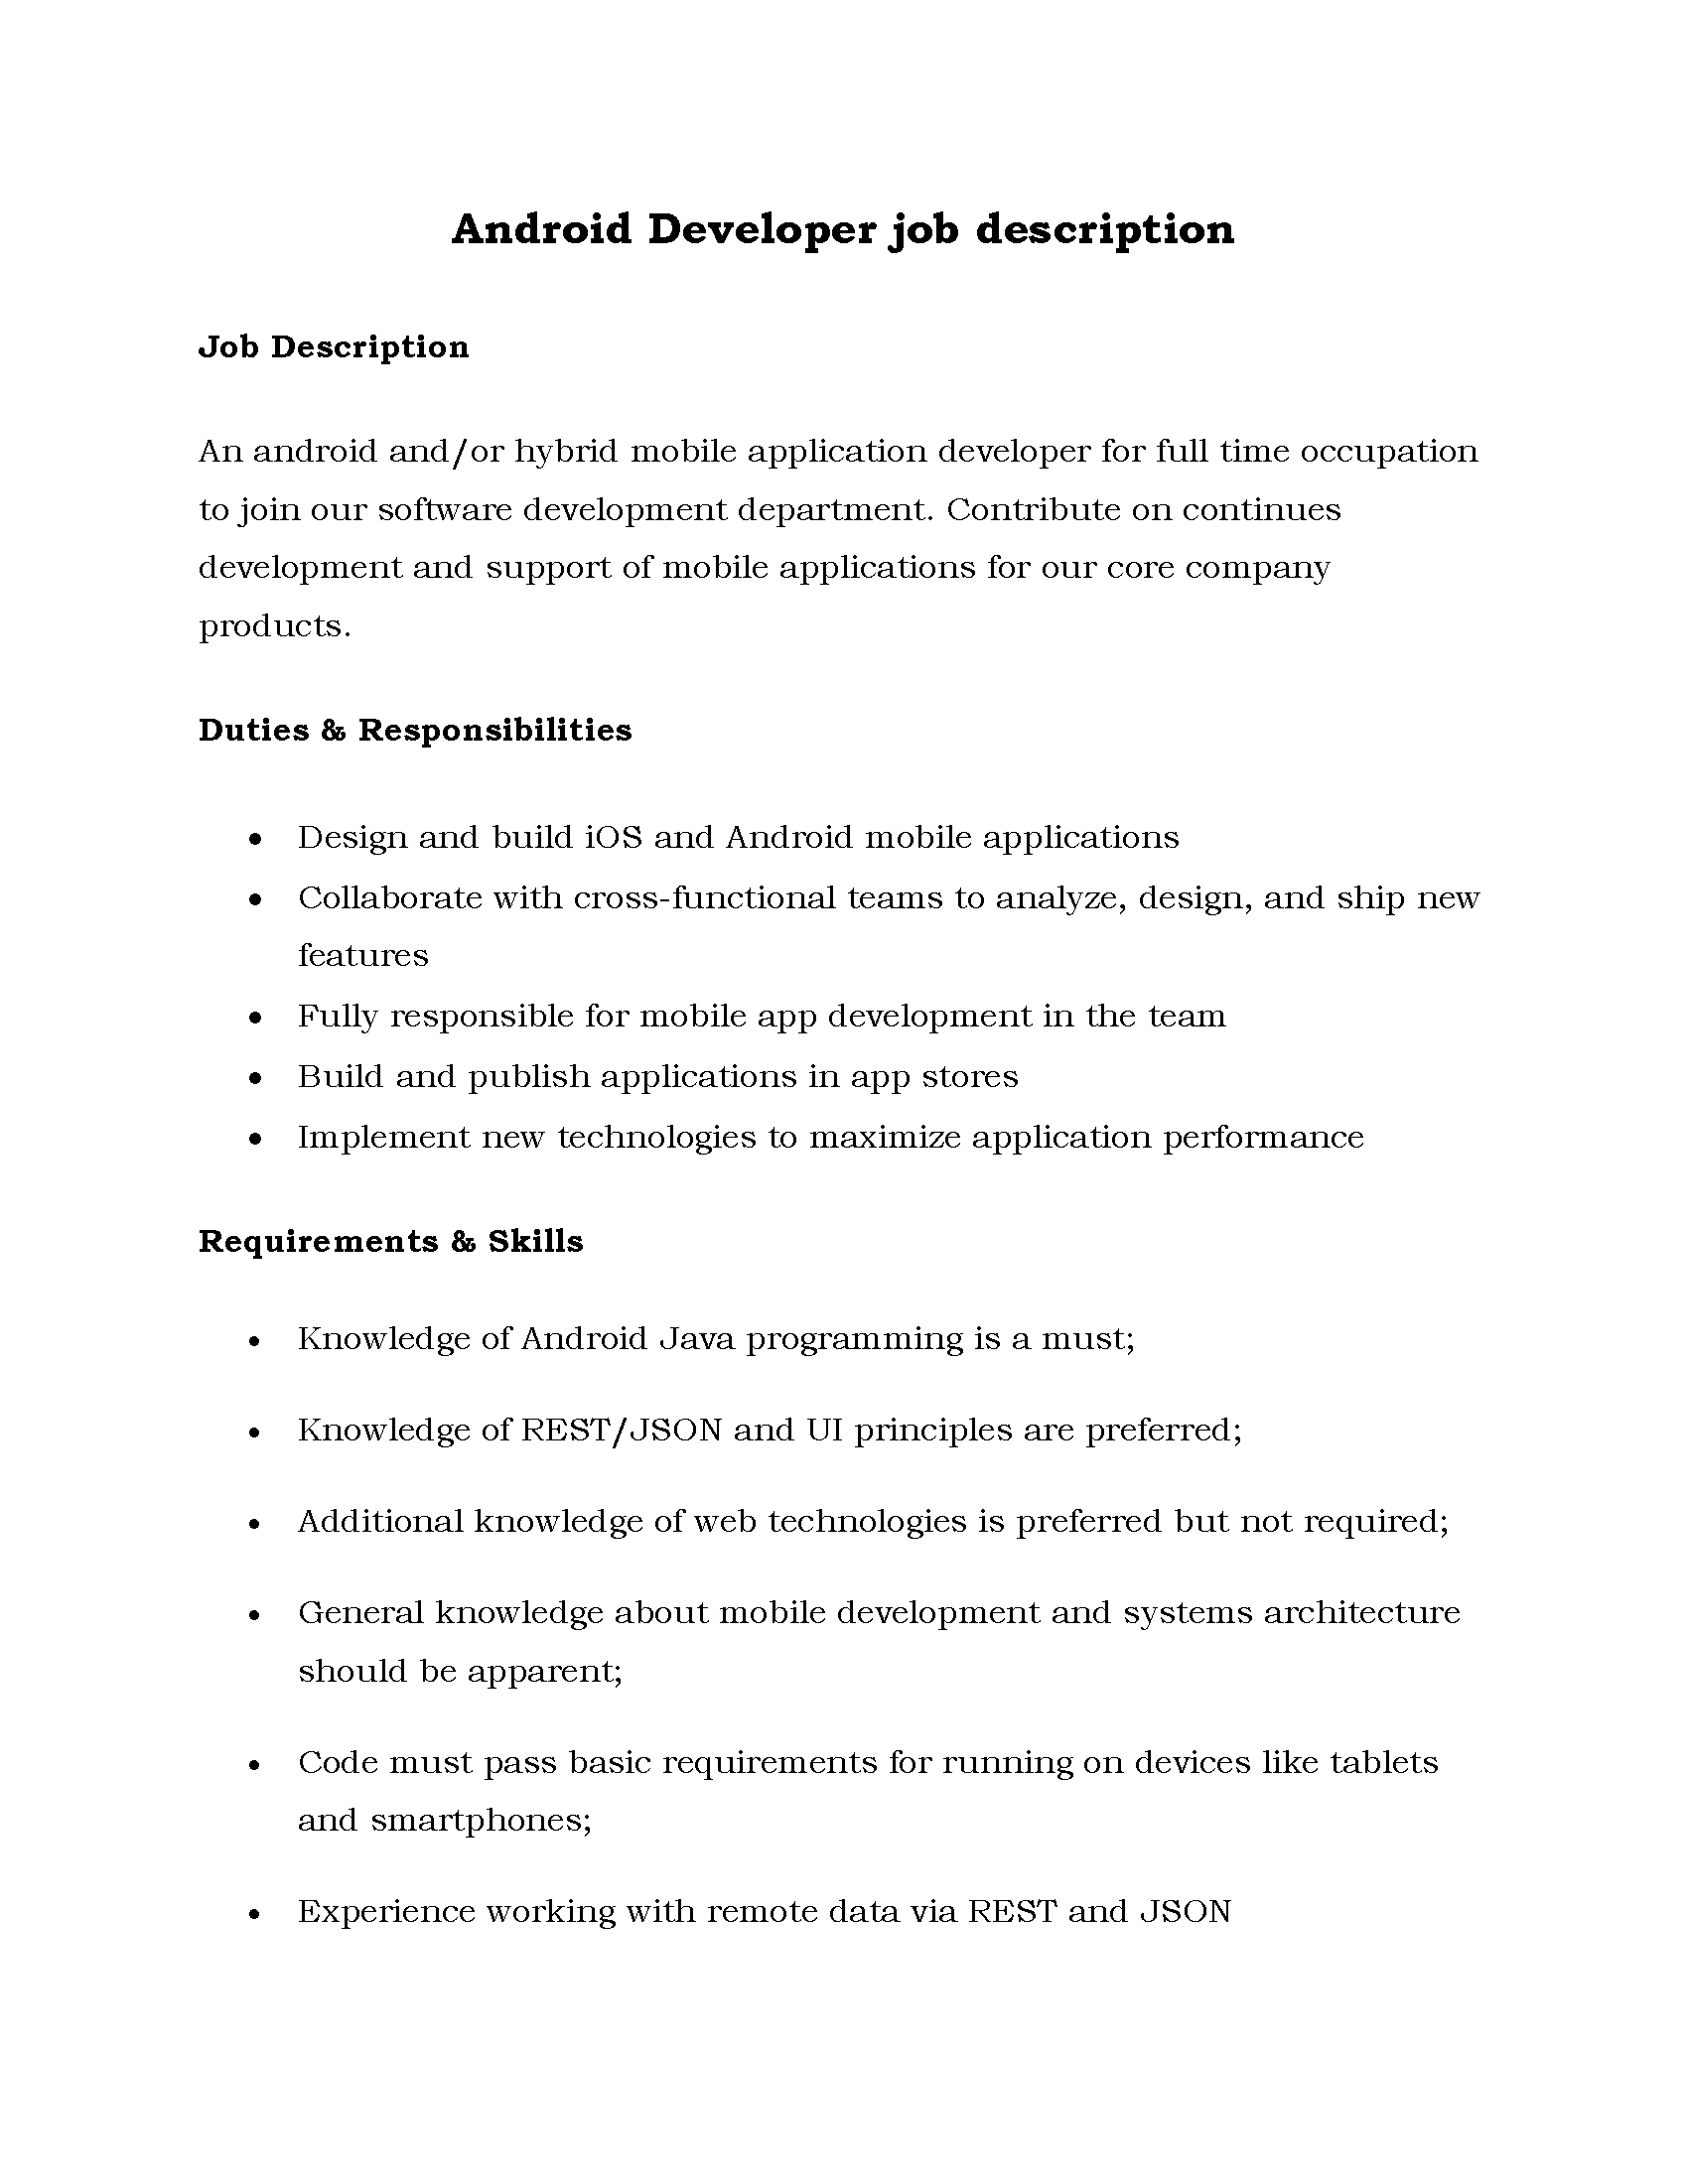 04-Android Developer job description